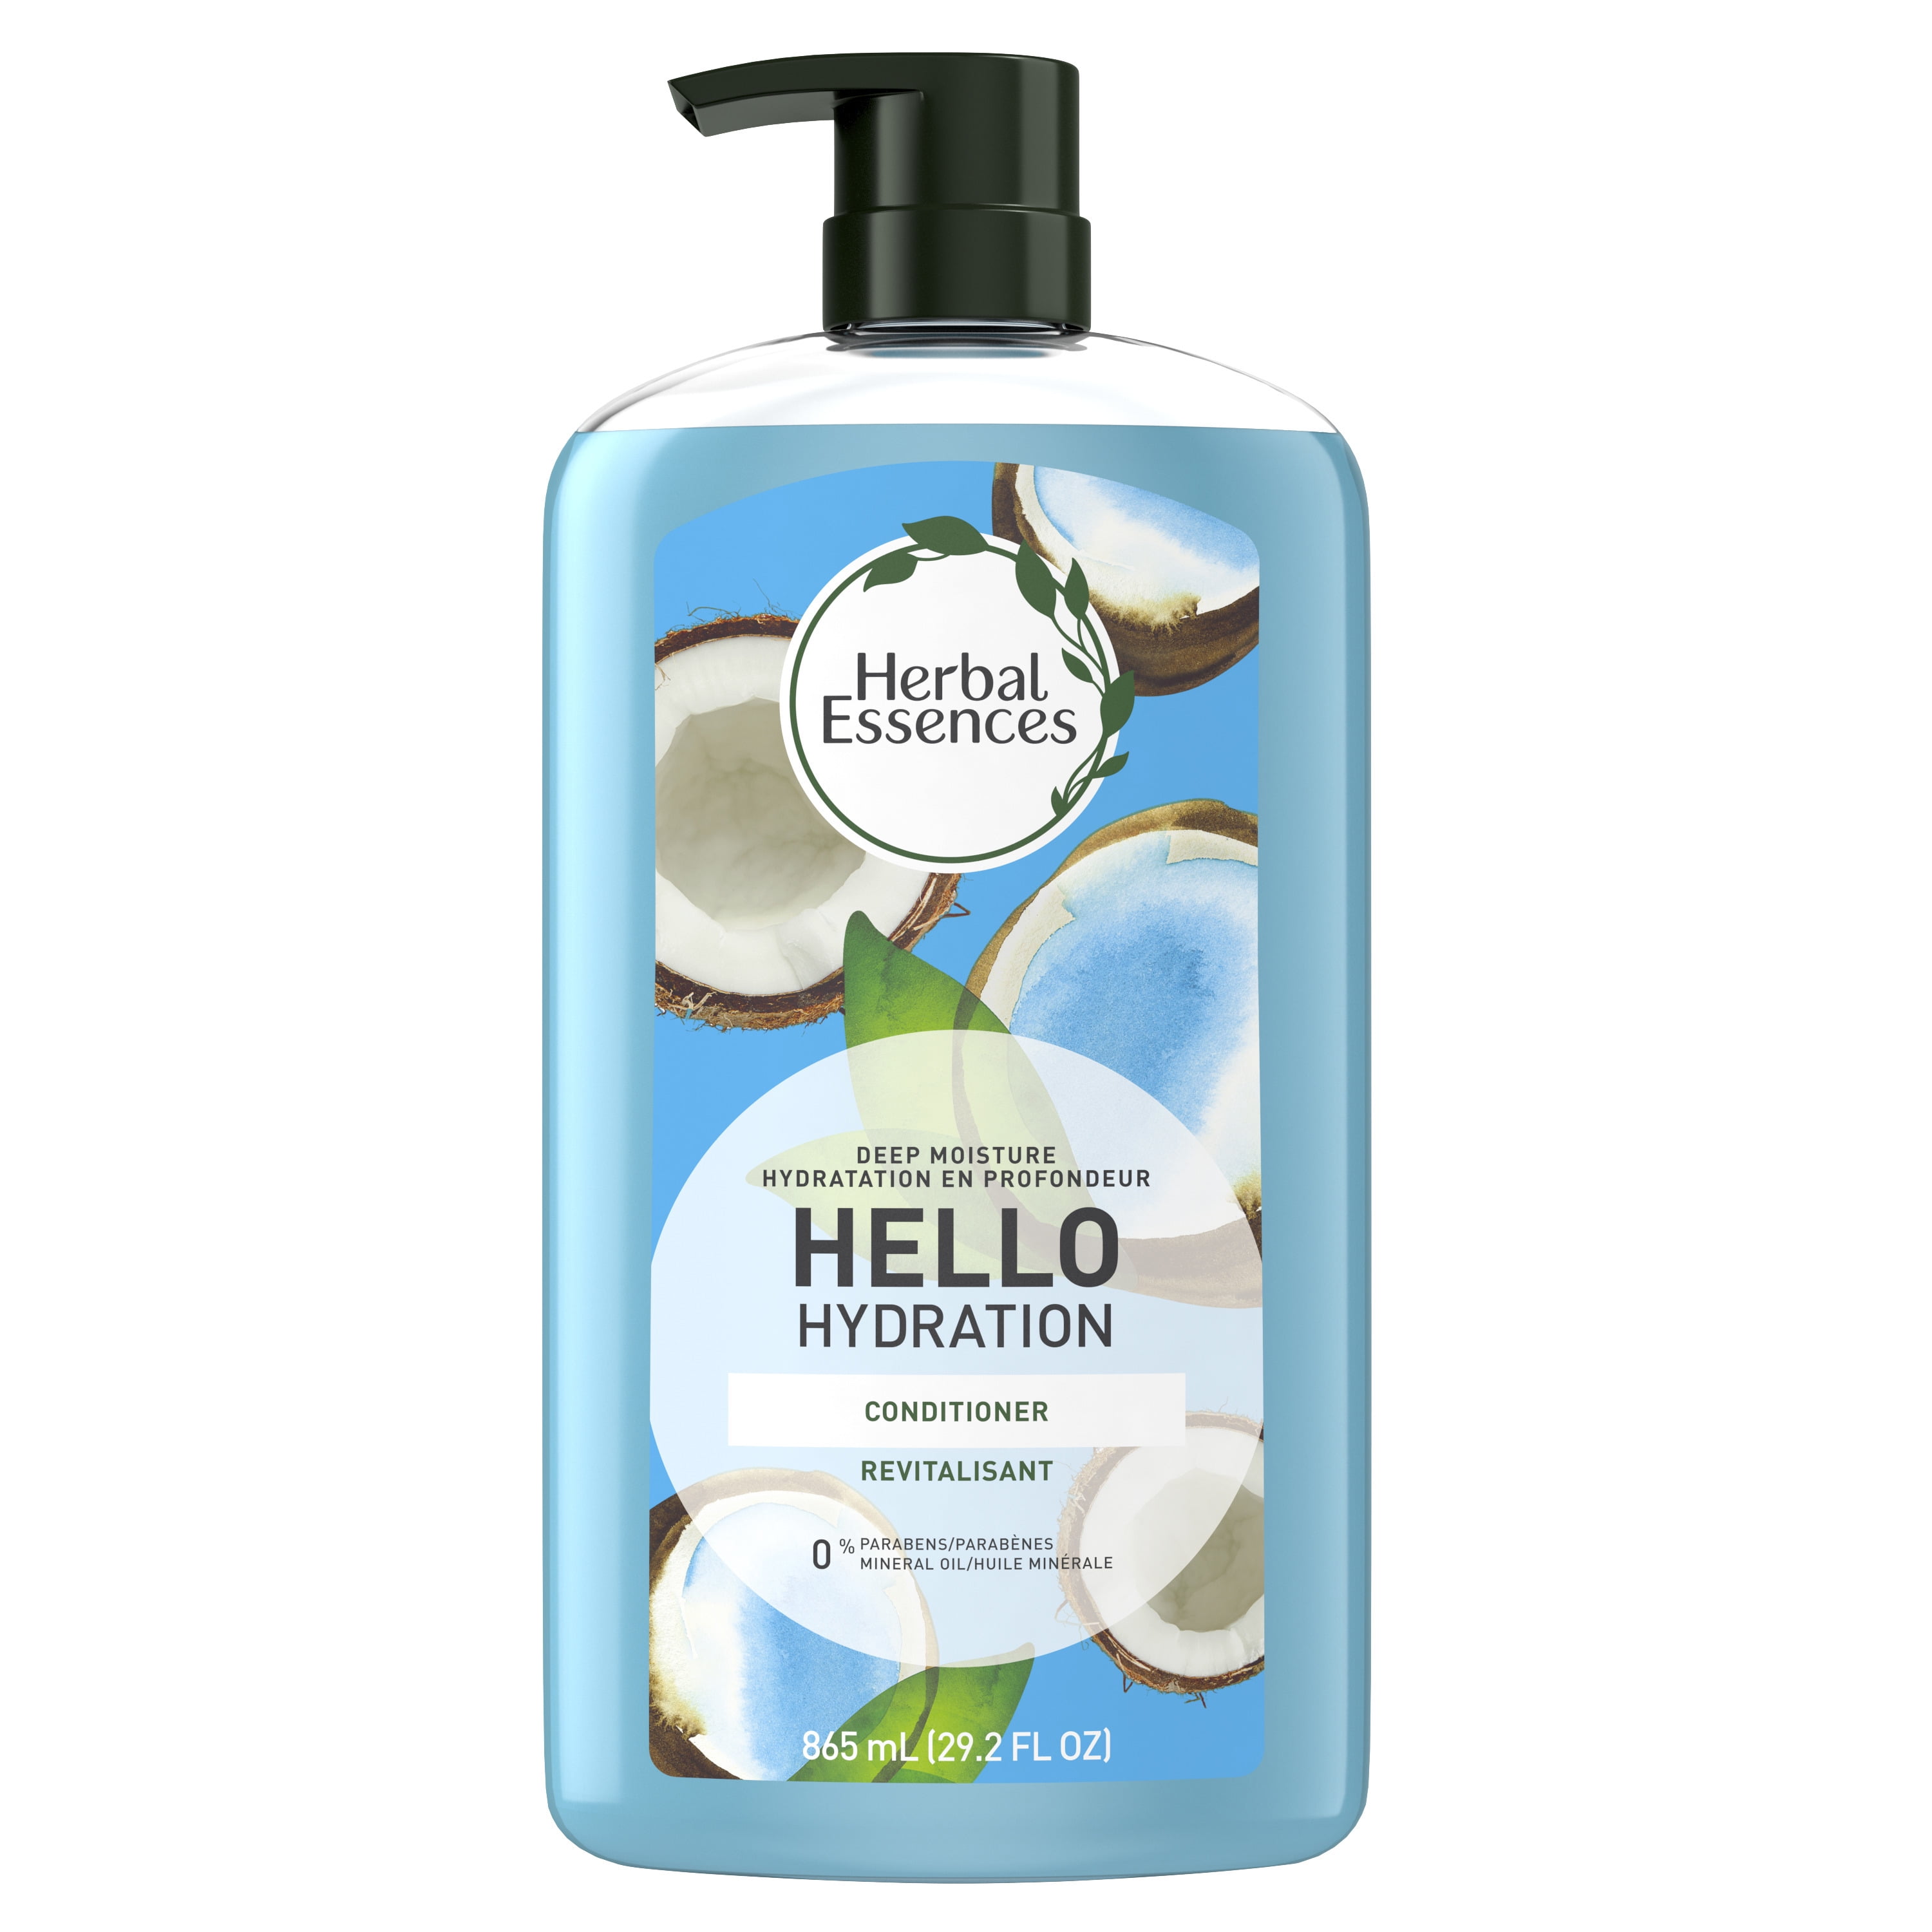 Herbal Essences Hello Hydration Conditioner, All Hair Types, Deep Moisture,  29.2 fl oz